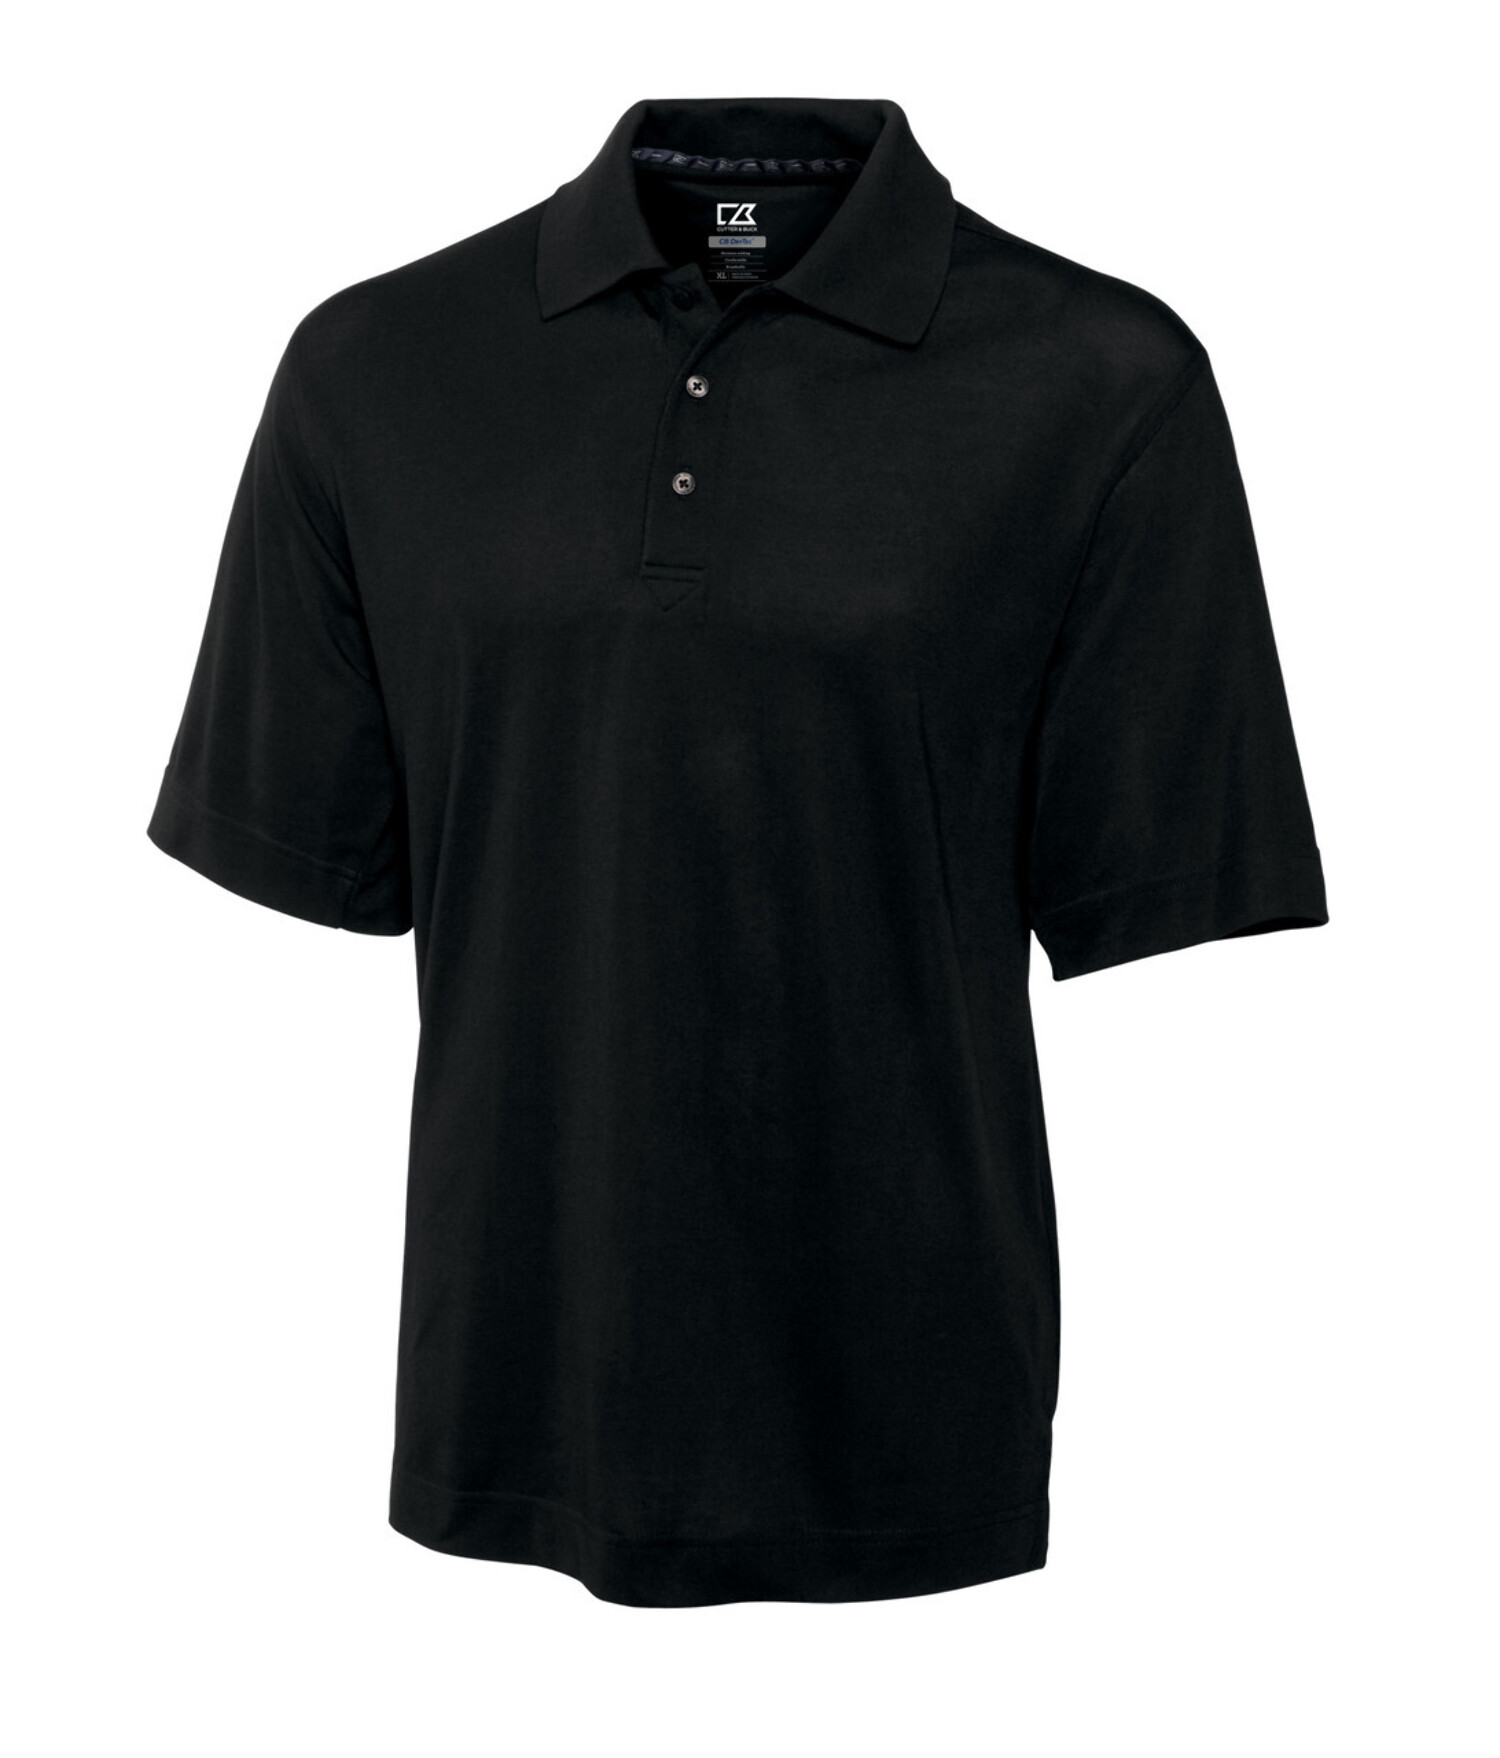 Cutter & Buck Men's Classic Three Button Polo Shirt - image 2 of 9